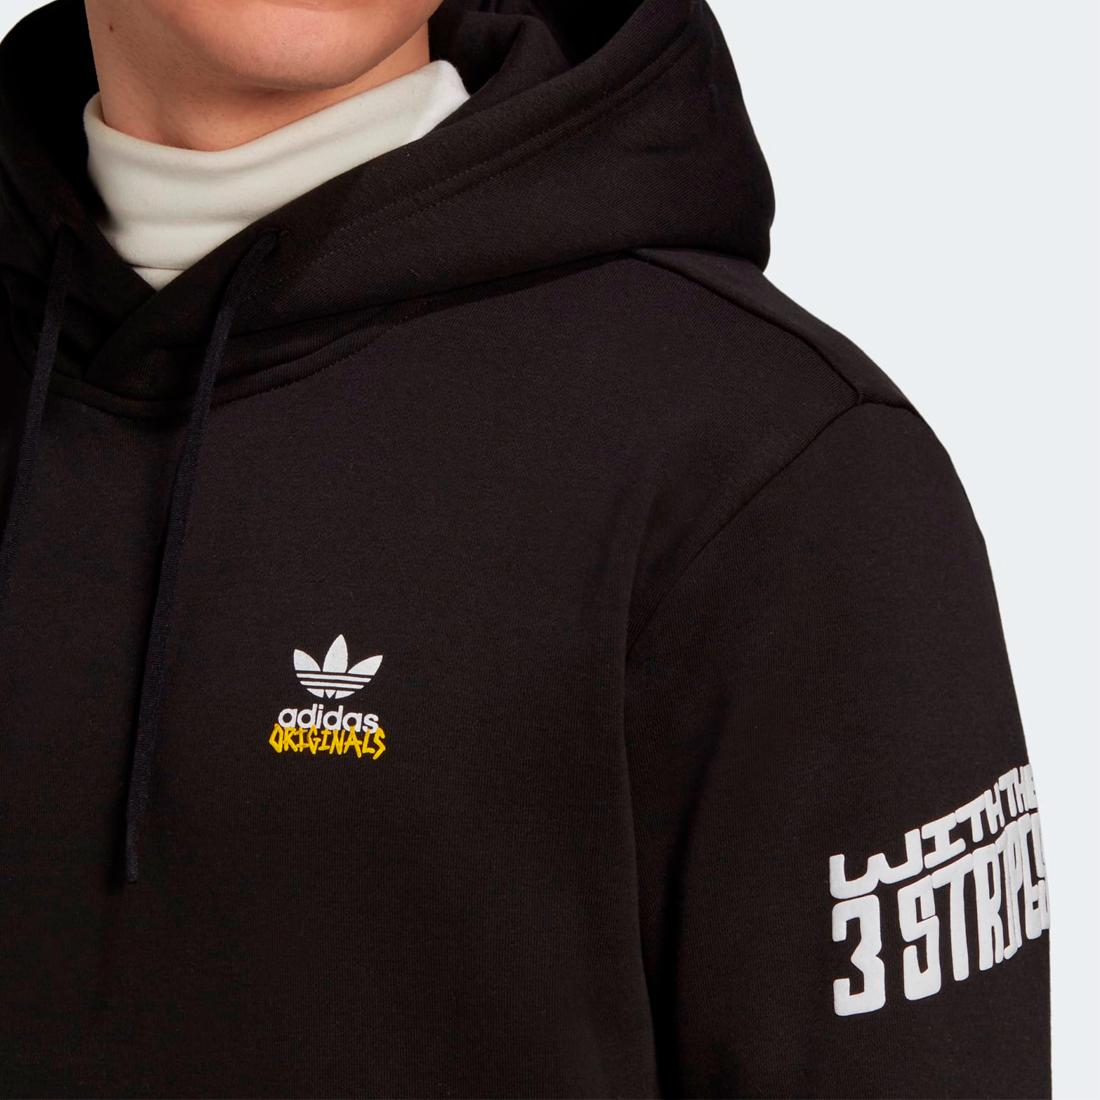 Adidas Unite hoodie black